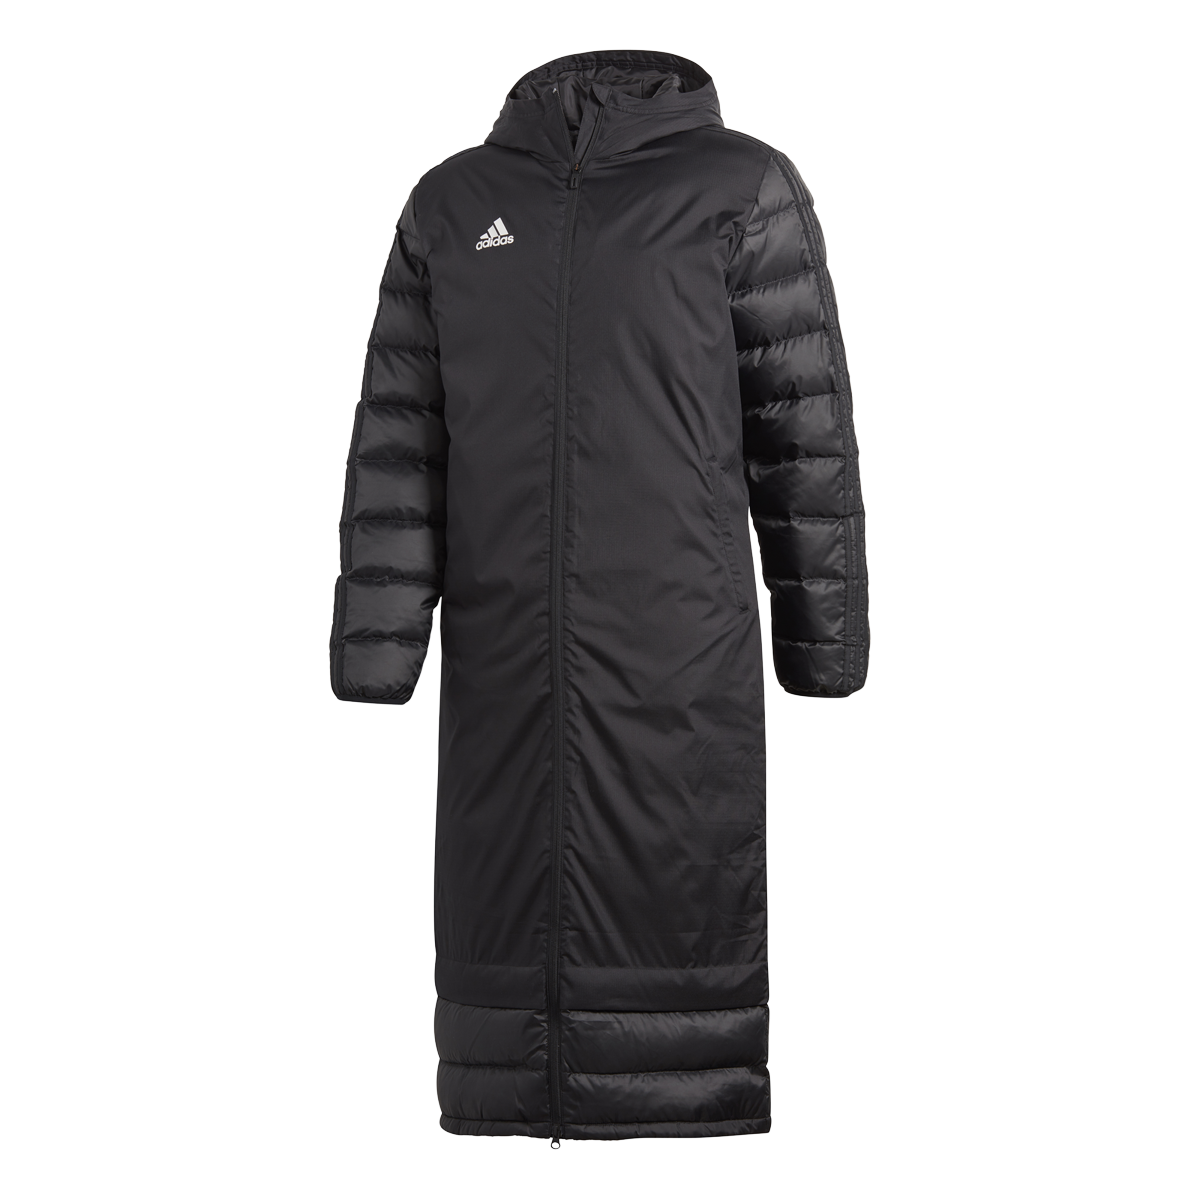 Adidas Winter Coat 18 černá/bílá UK XS Pánské